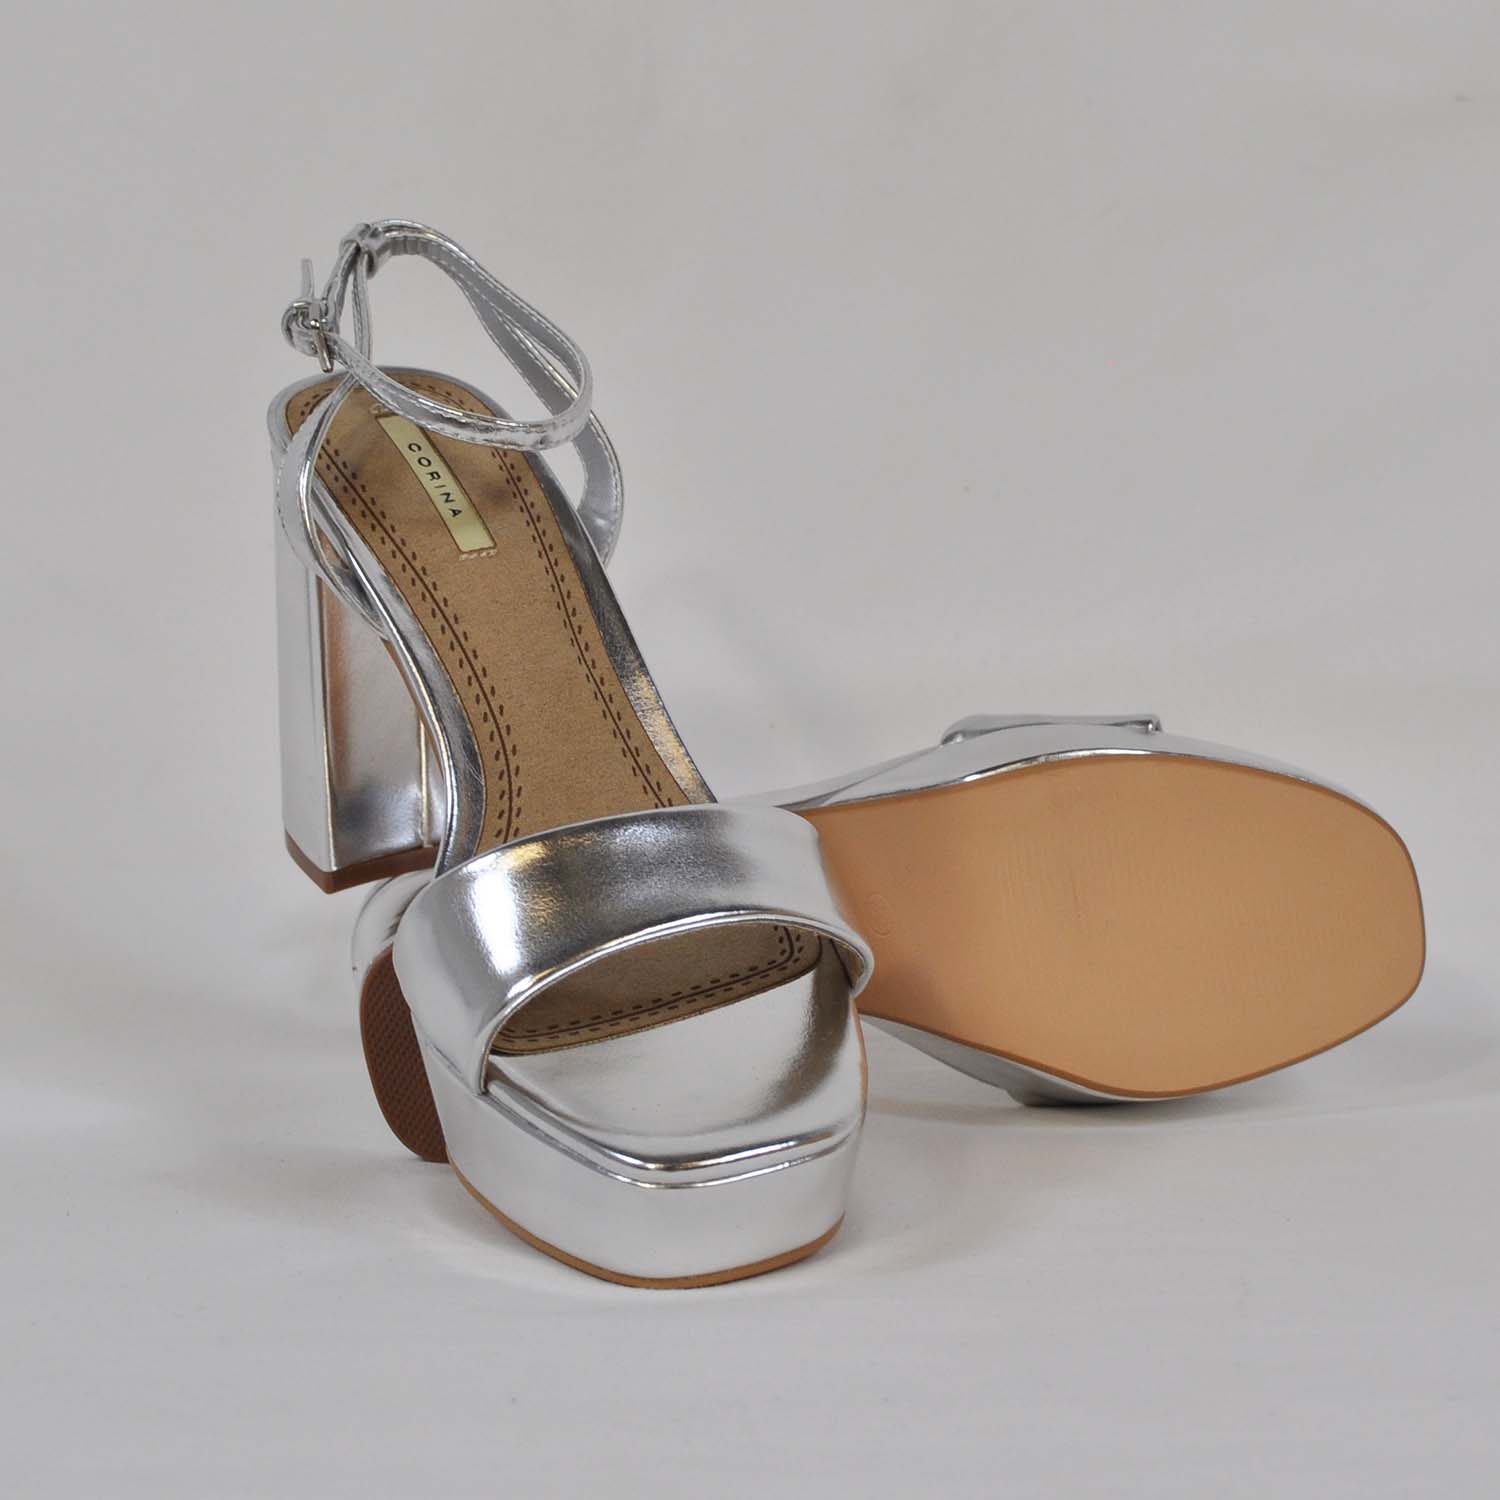 Silver square heel sandal